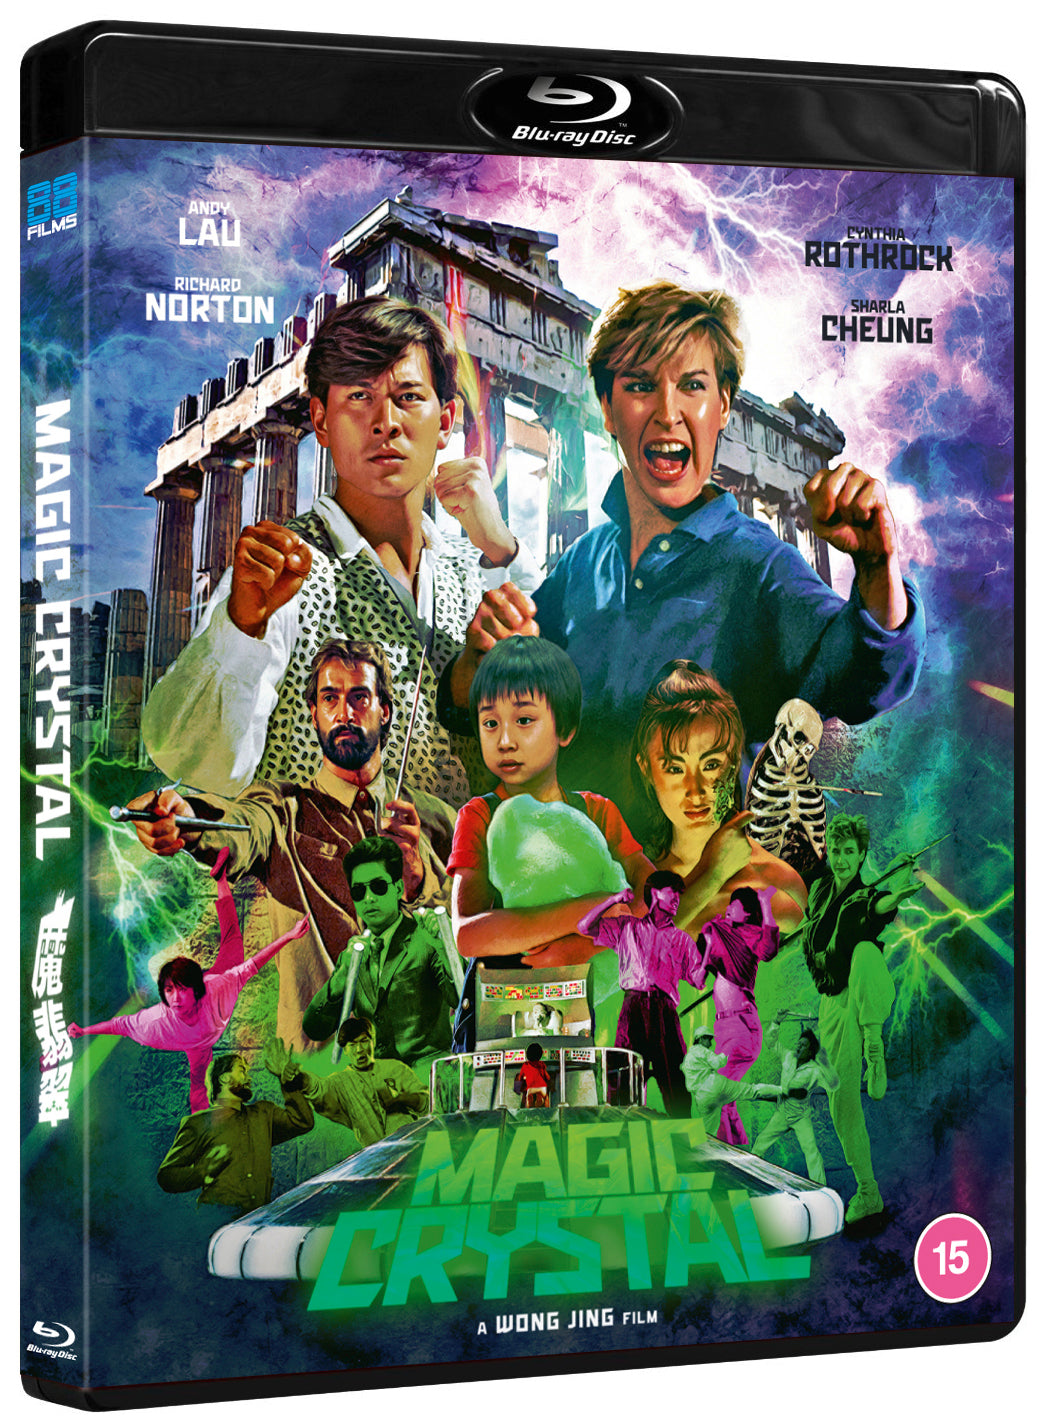 MAGIC CRYSTAL – 88 Films